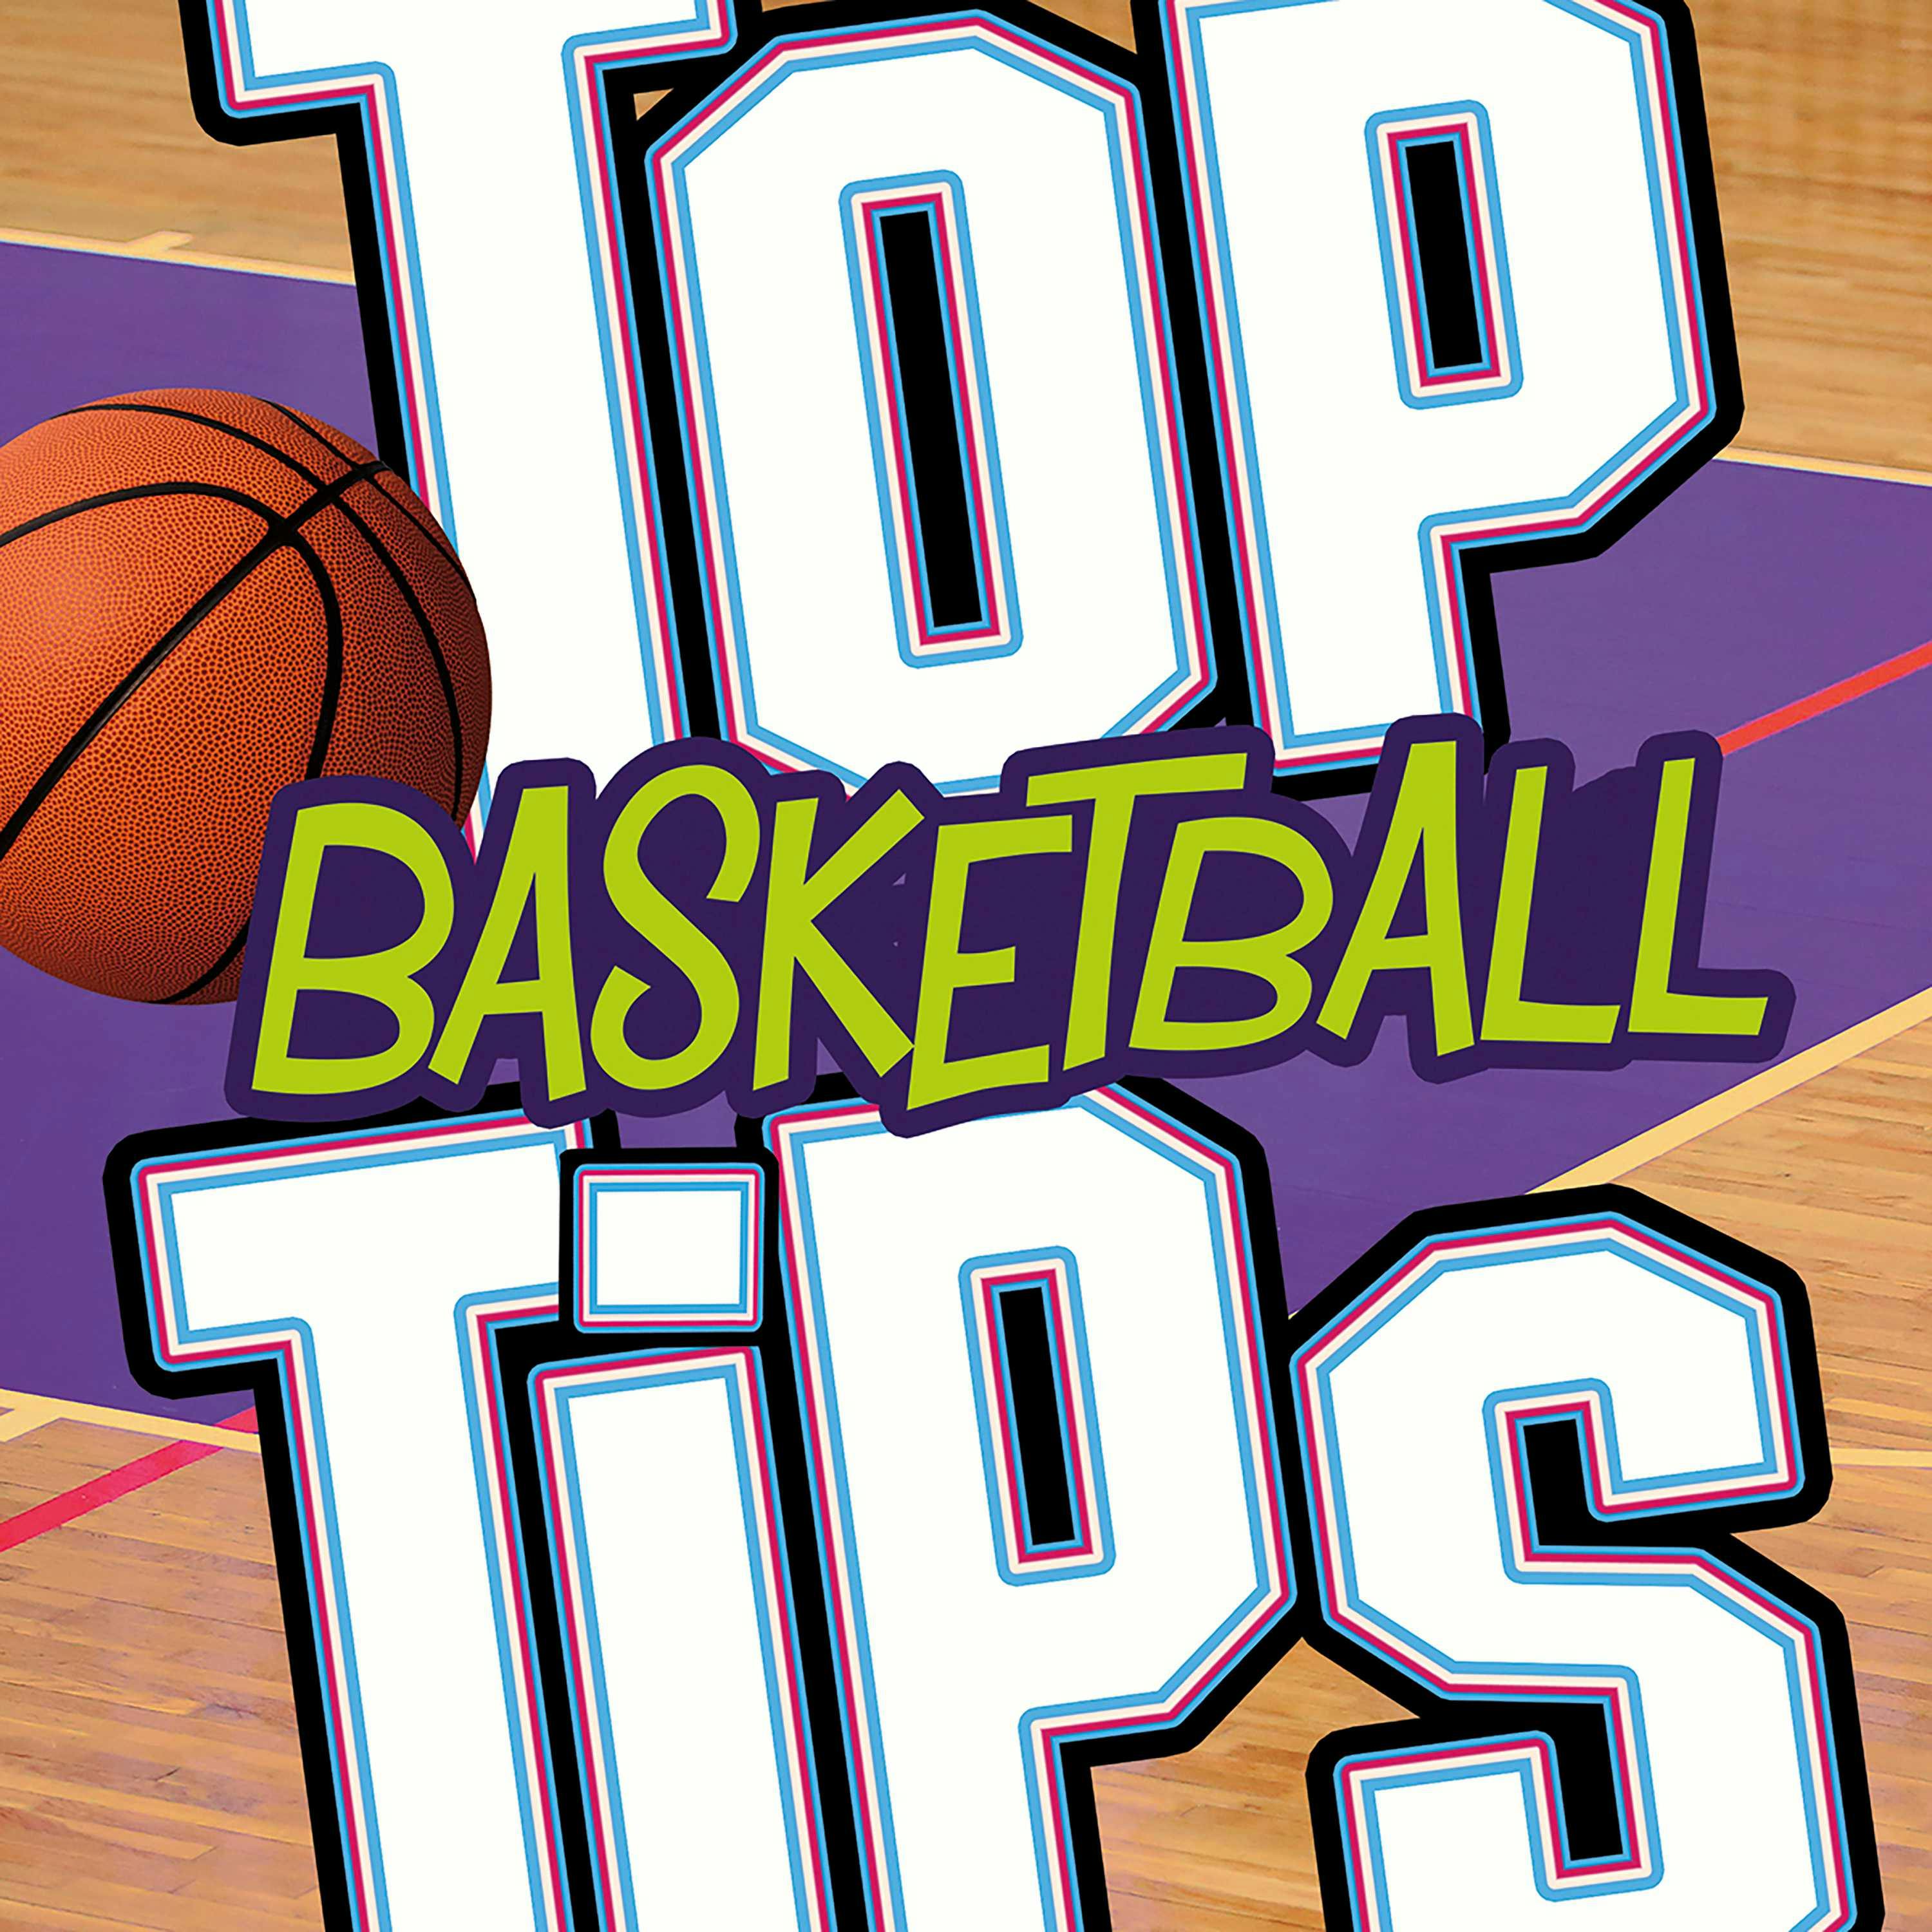 Top Basketball Tips - Rebecca Rissman